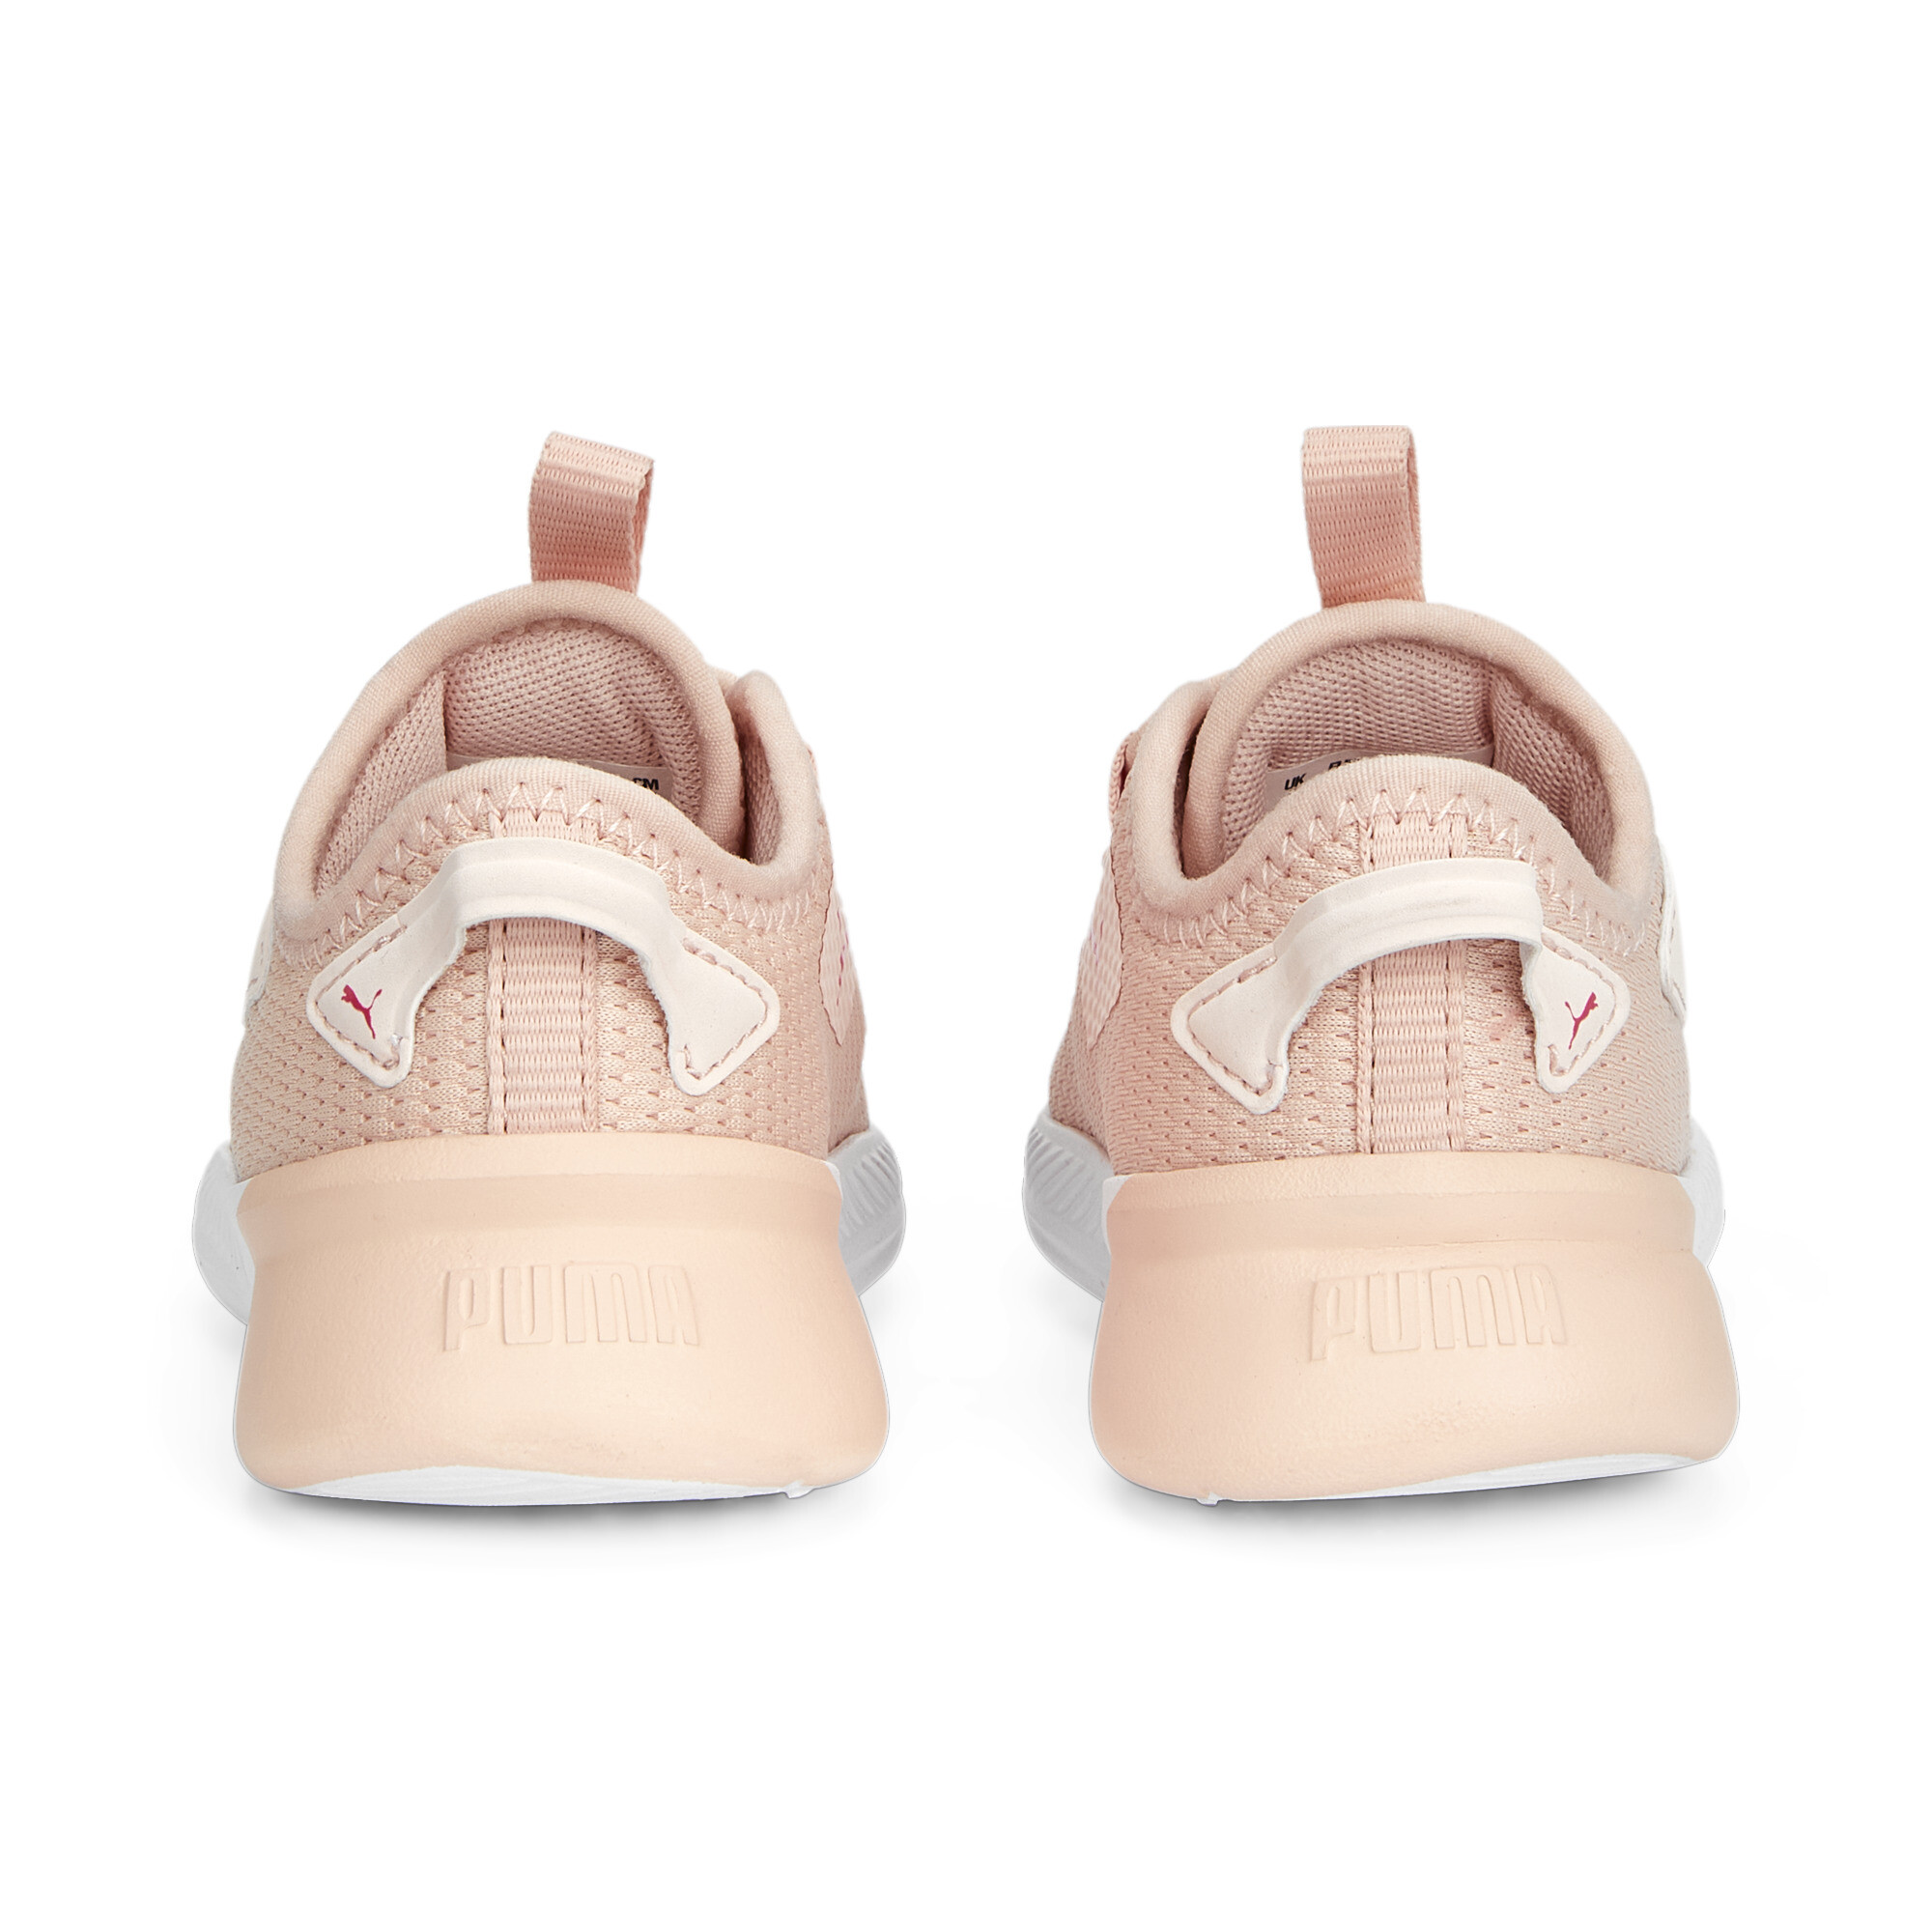 Puma Retaliate 2 AC Sneakers Babies, Pink, Size 22, Shoes